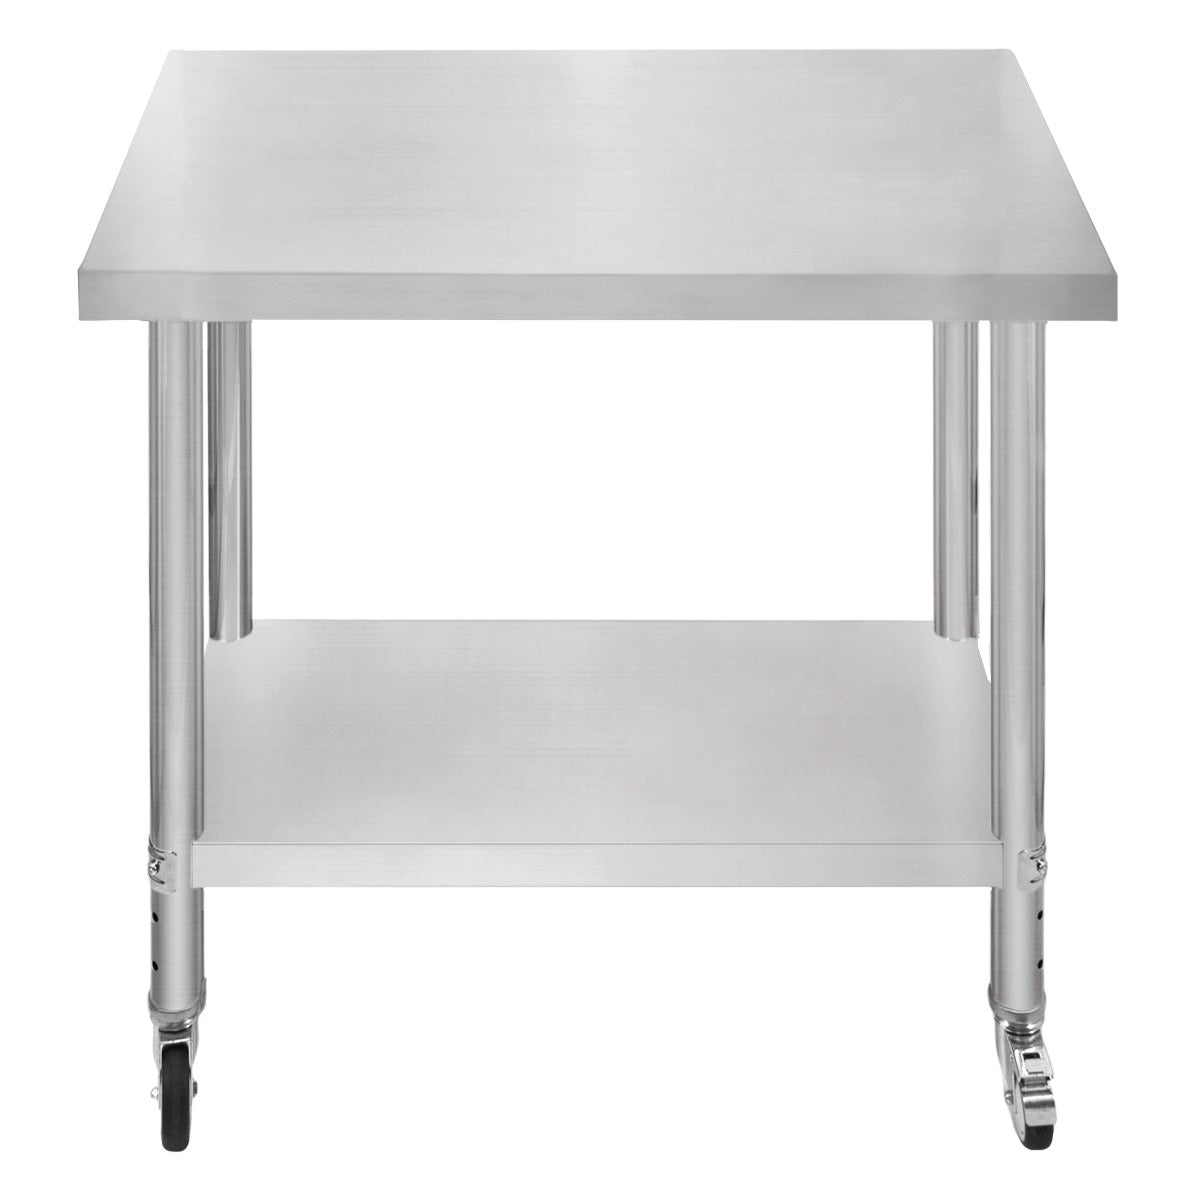 KuKoo Work Table – 90cm x 60cm x 86cm